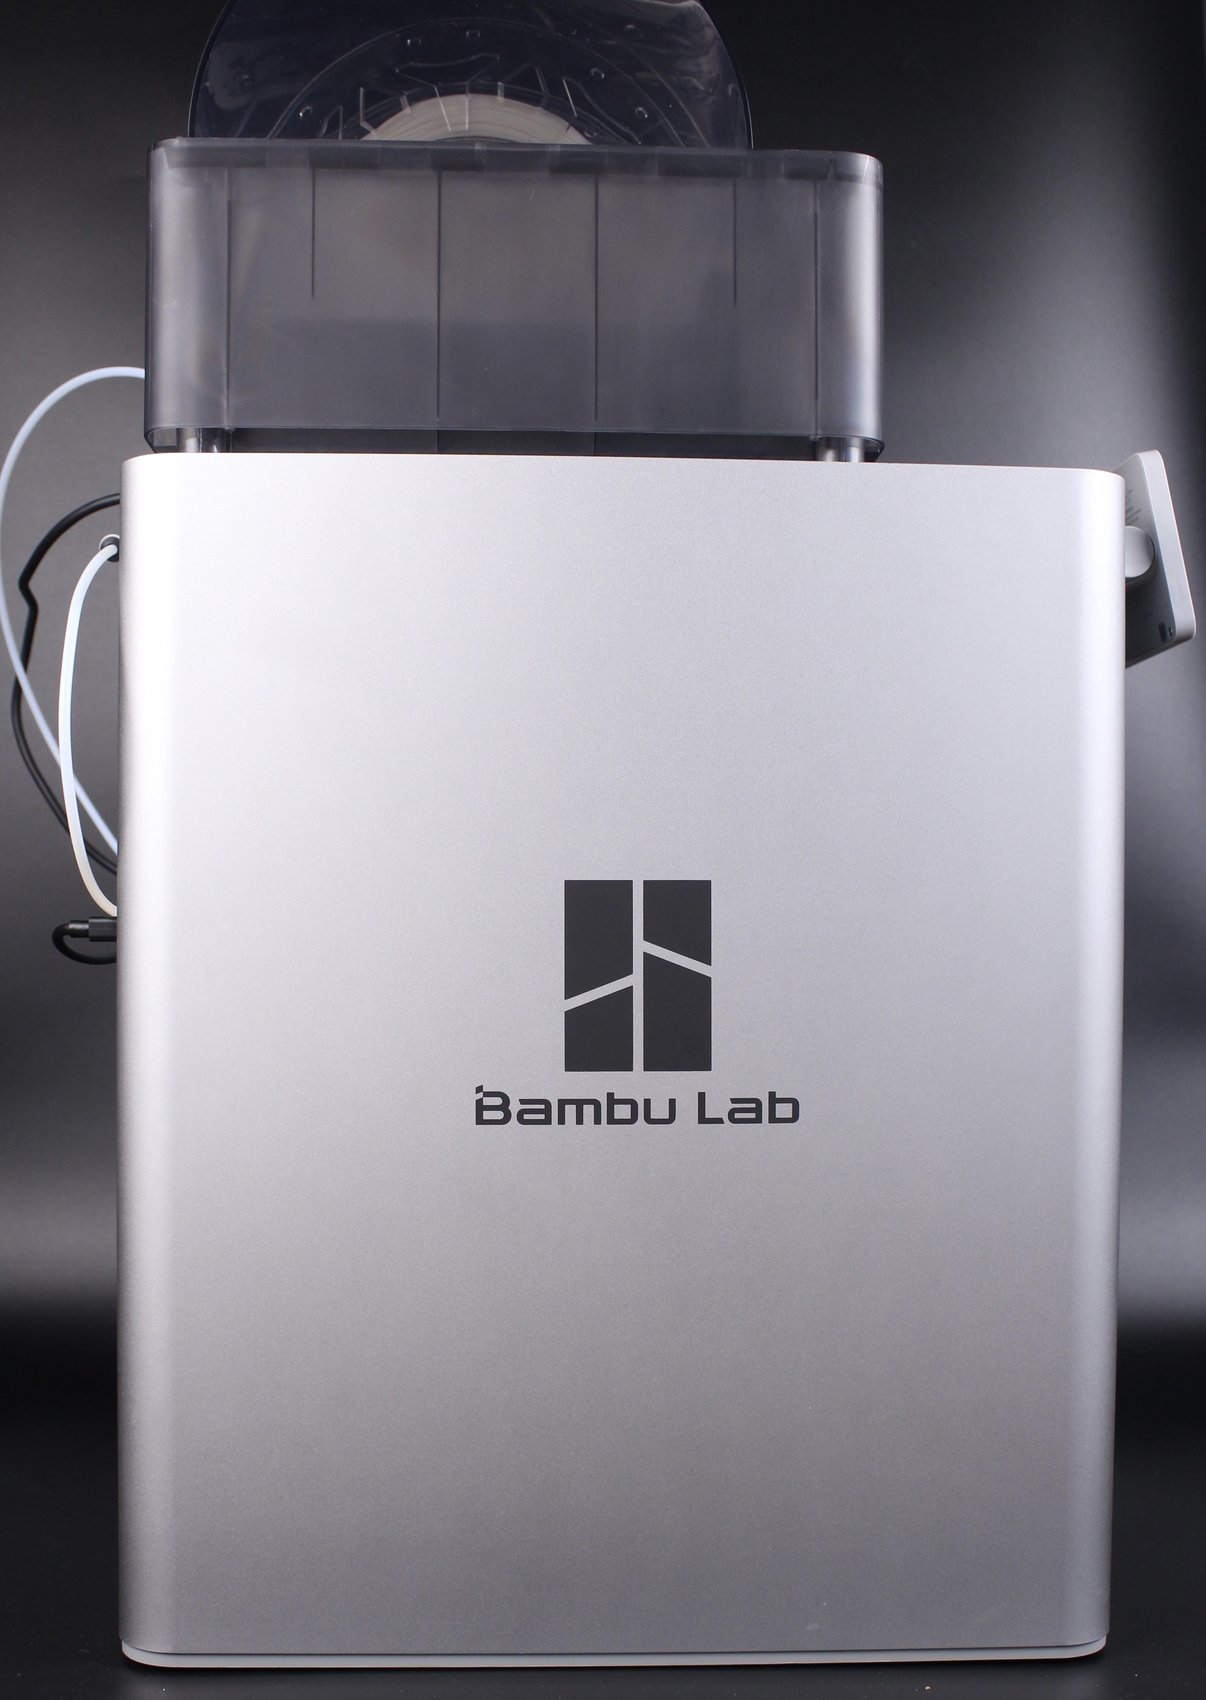 Bambu Lab X1 Carbon Design5 | Bambu Lab X1-Carbon Review: Living in the Future